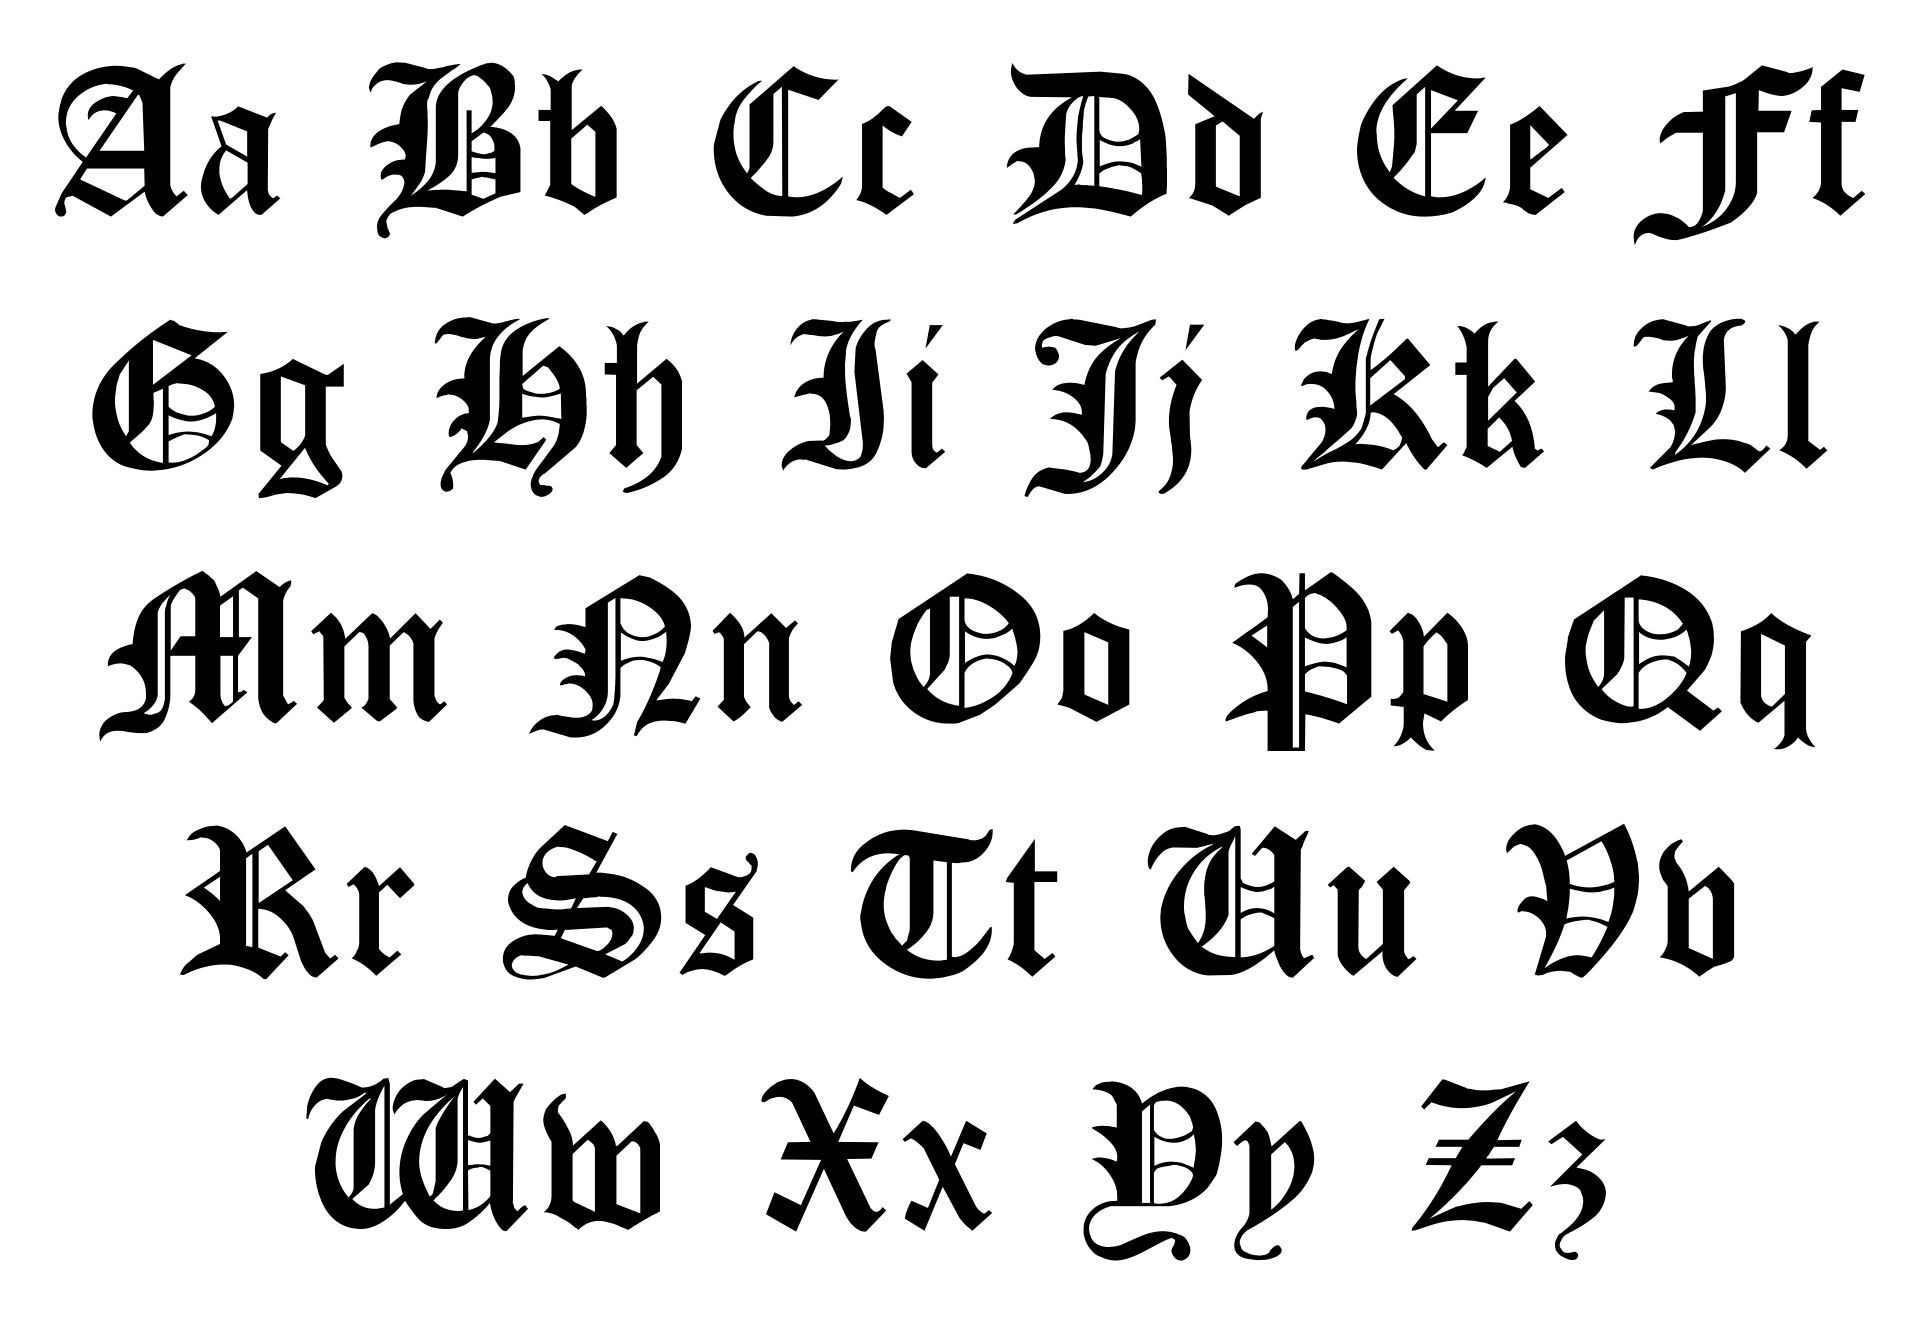 21 Best Printable Old English Alphabet A-Z - printablee.com